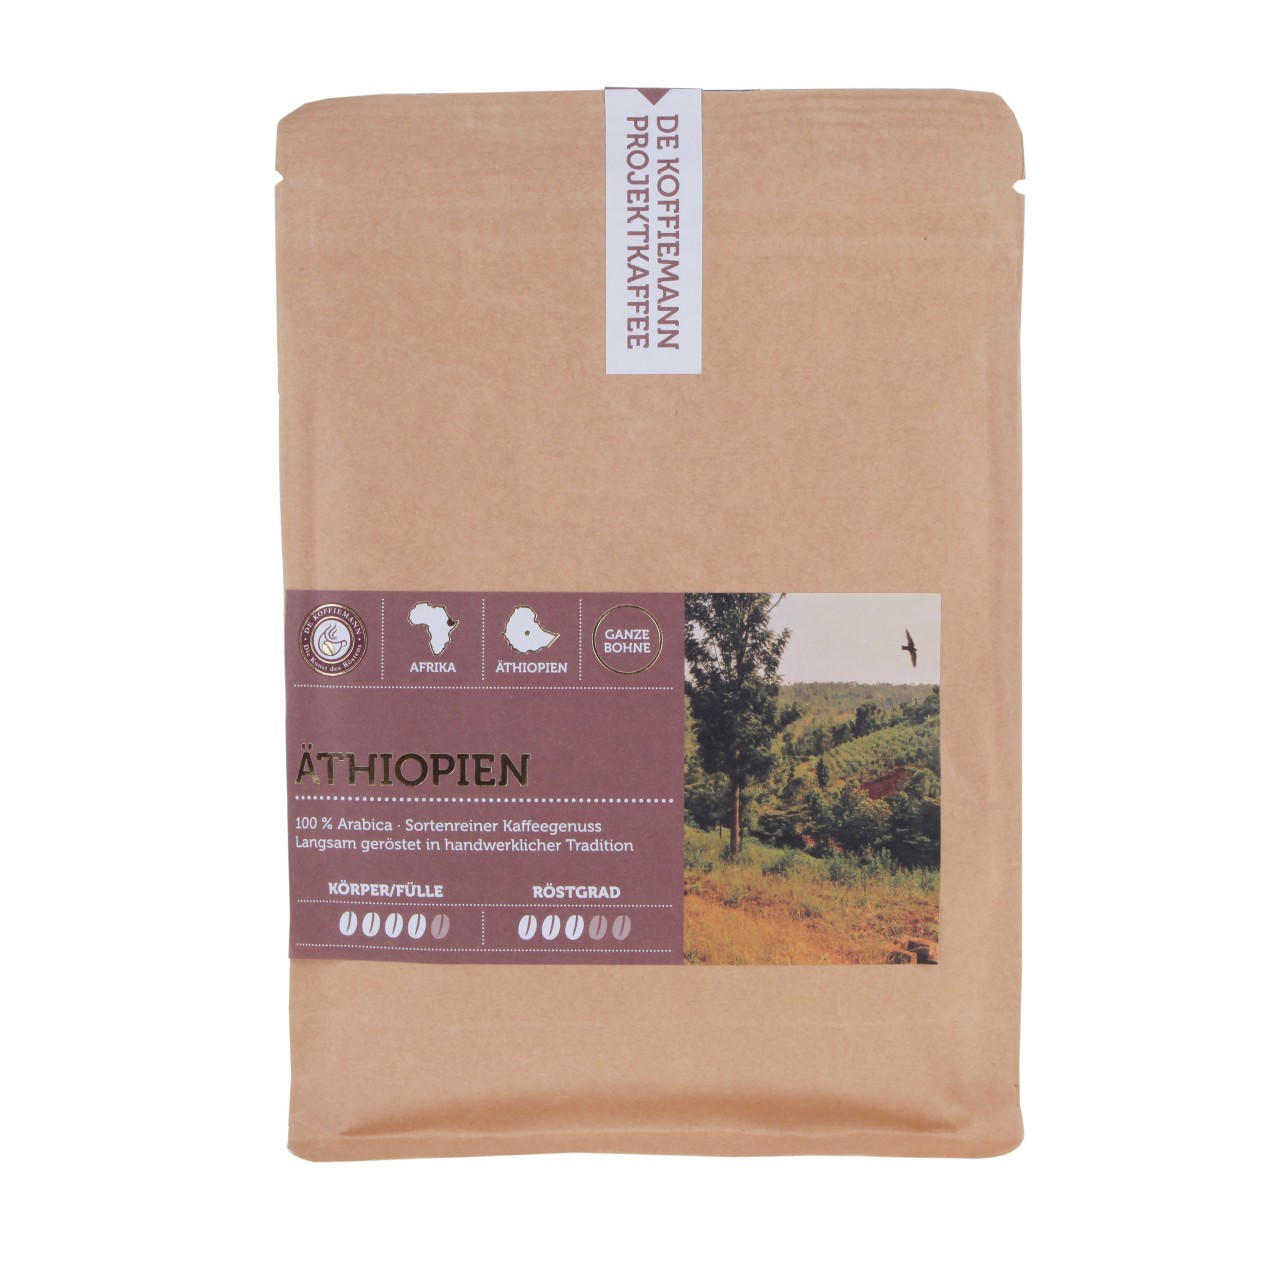 De Koffiemann Project Coffee Ethiopia